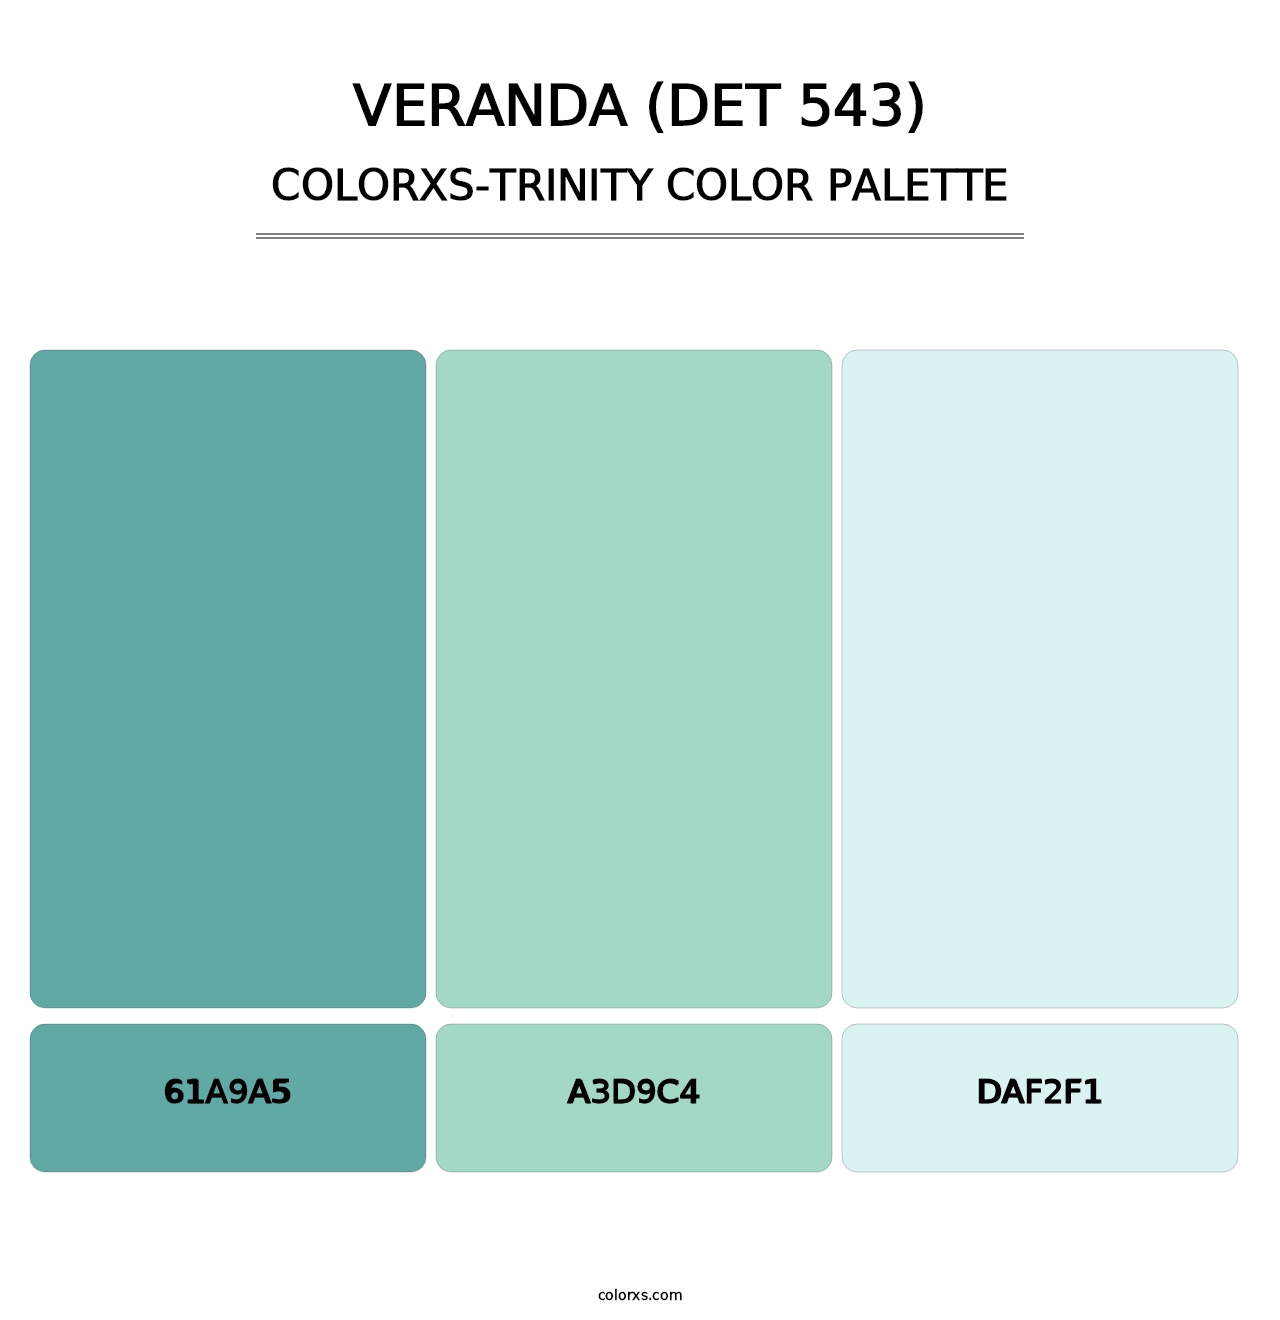 Veranda (DET 543) - Colorxs Trinity Palette